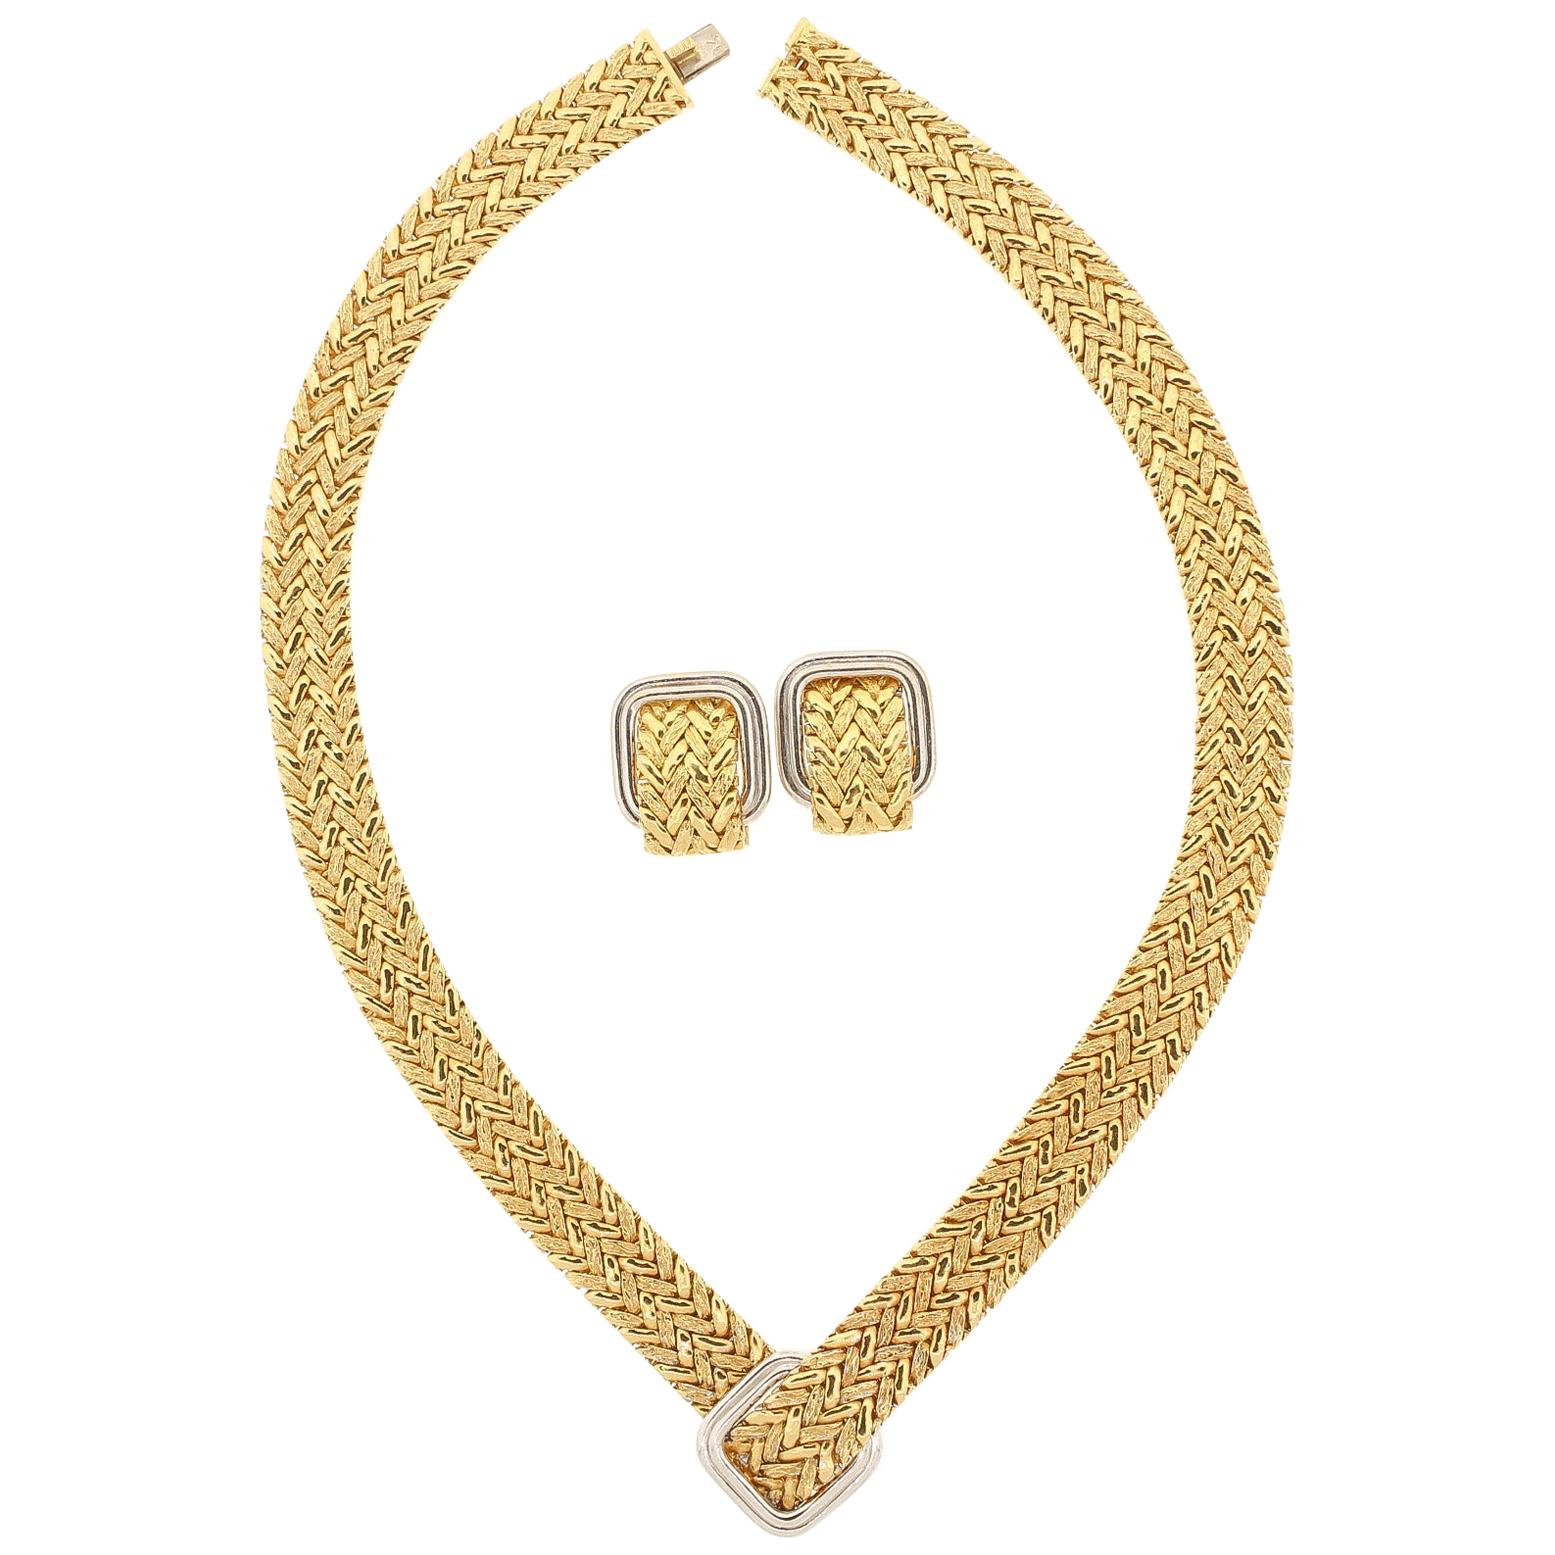 Vintage 18 Karat Gold Woven Necklace and Earring Set by Georges L’Enfant